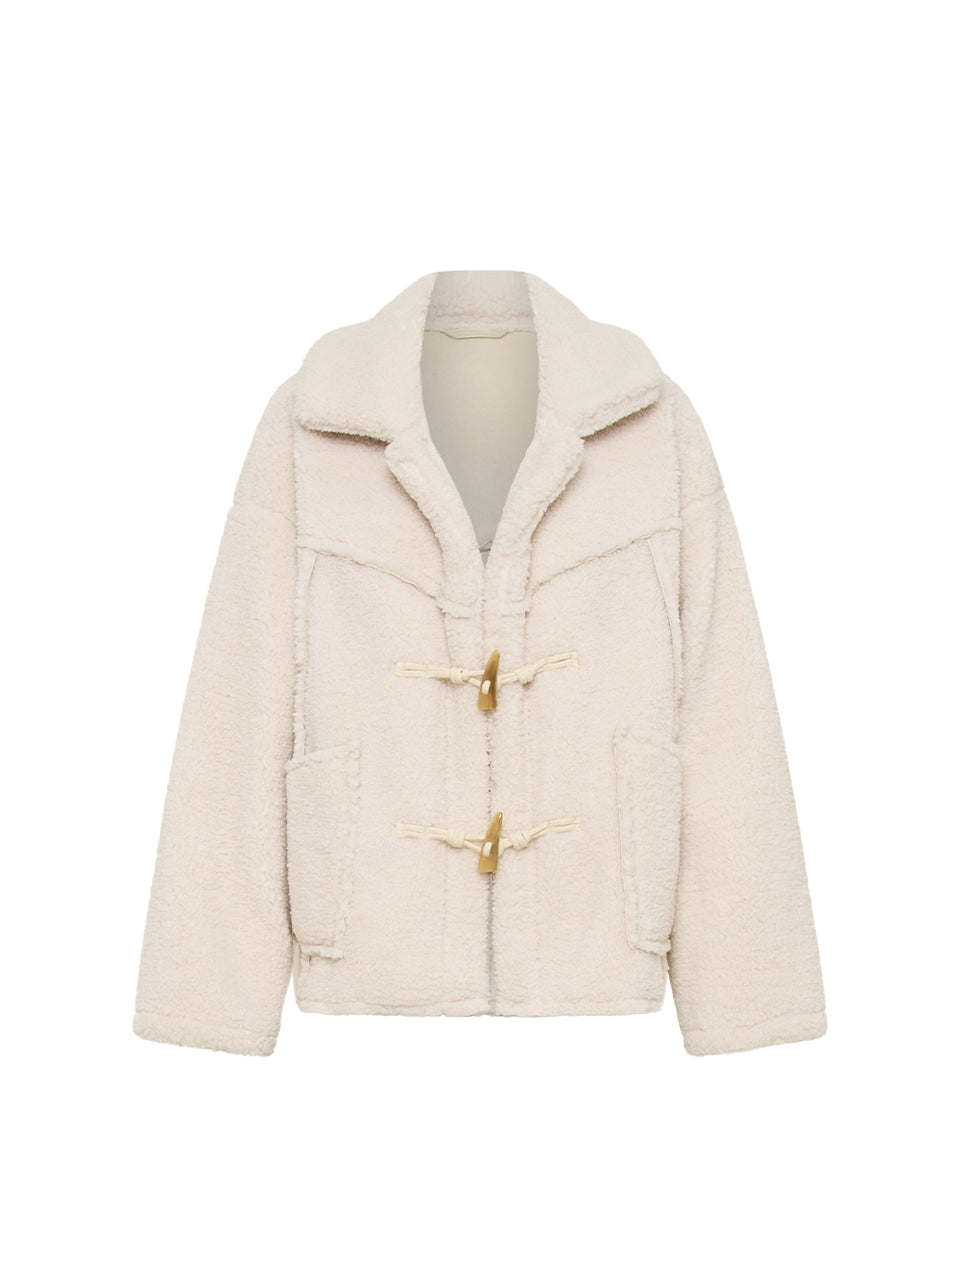 Lianna Jacket KIVARI | Cream reversible jacket